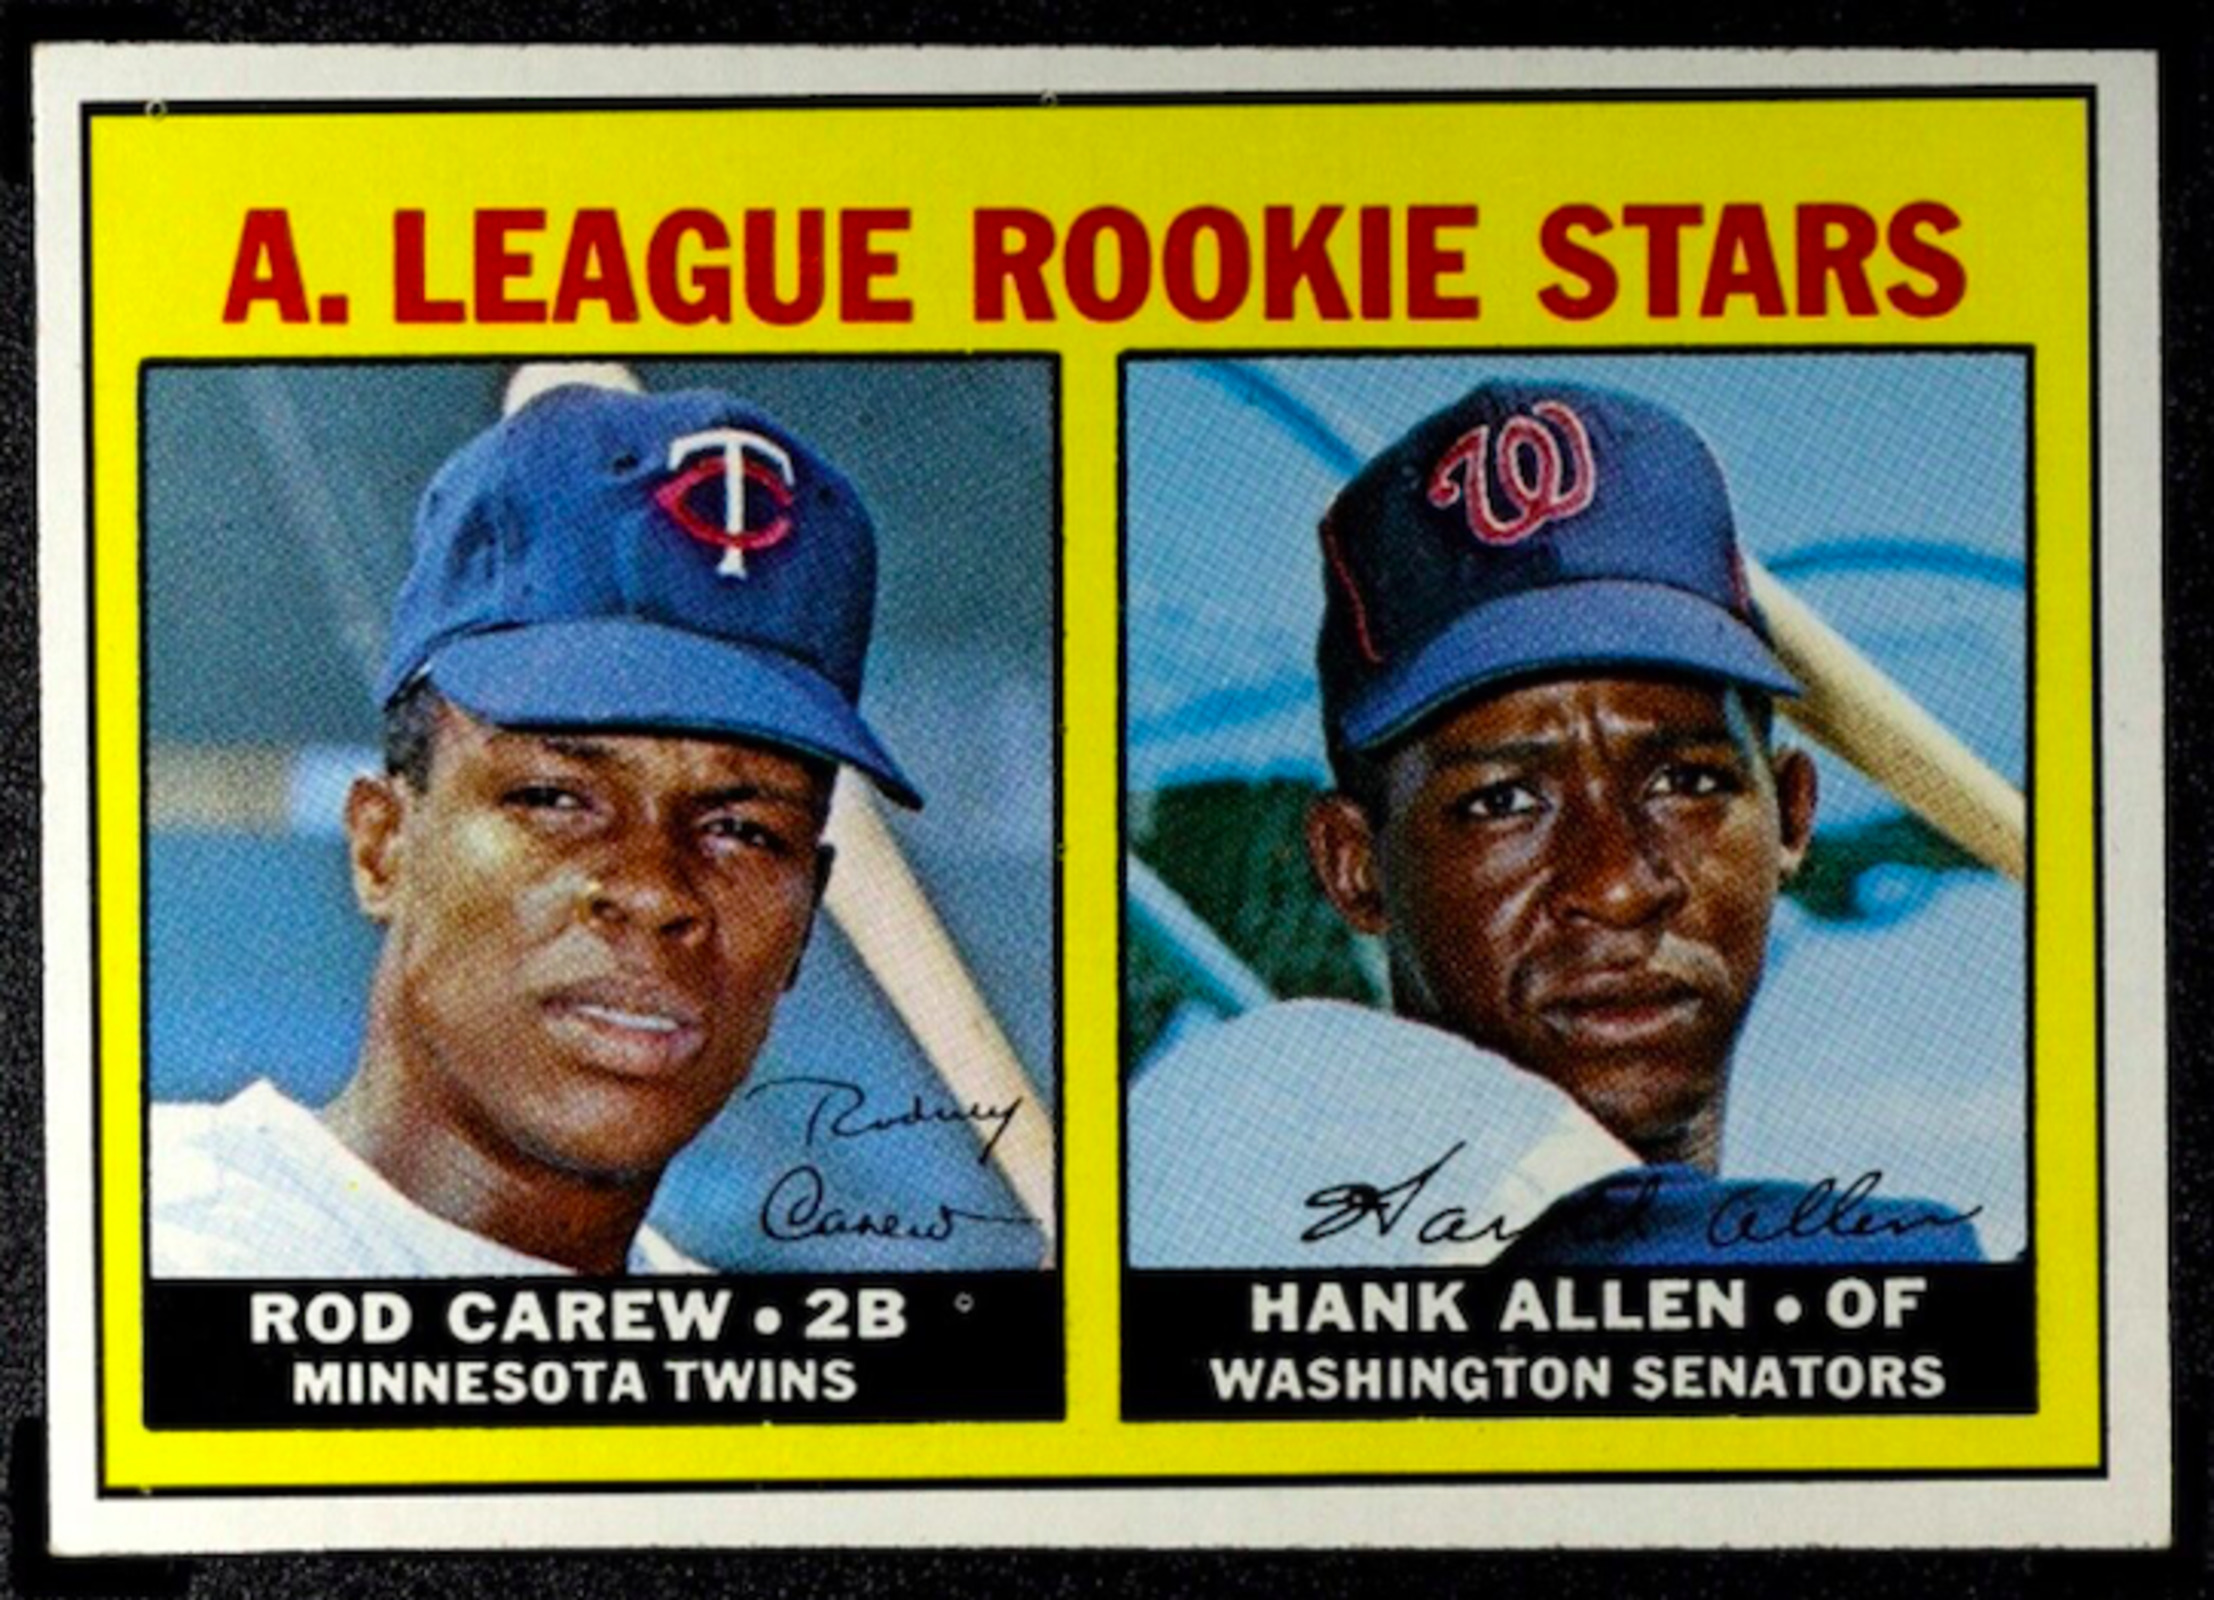 1967 Topps Rod Carew rookie card